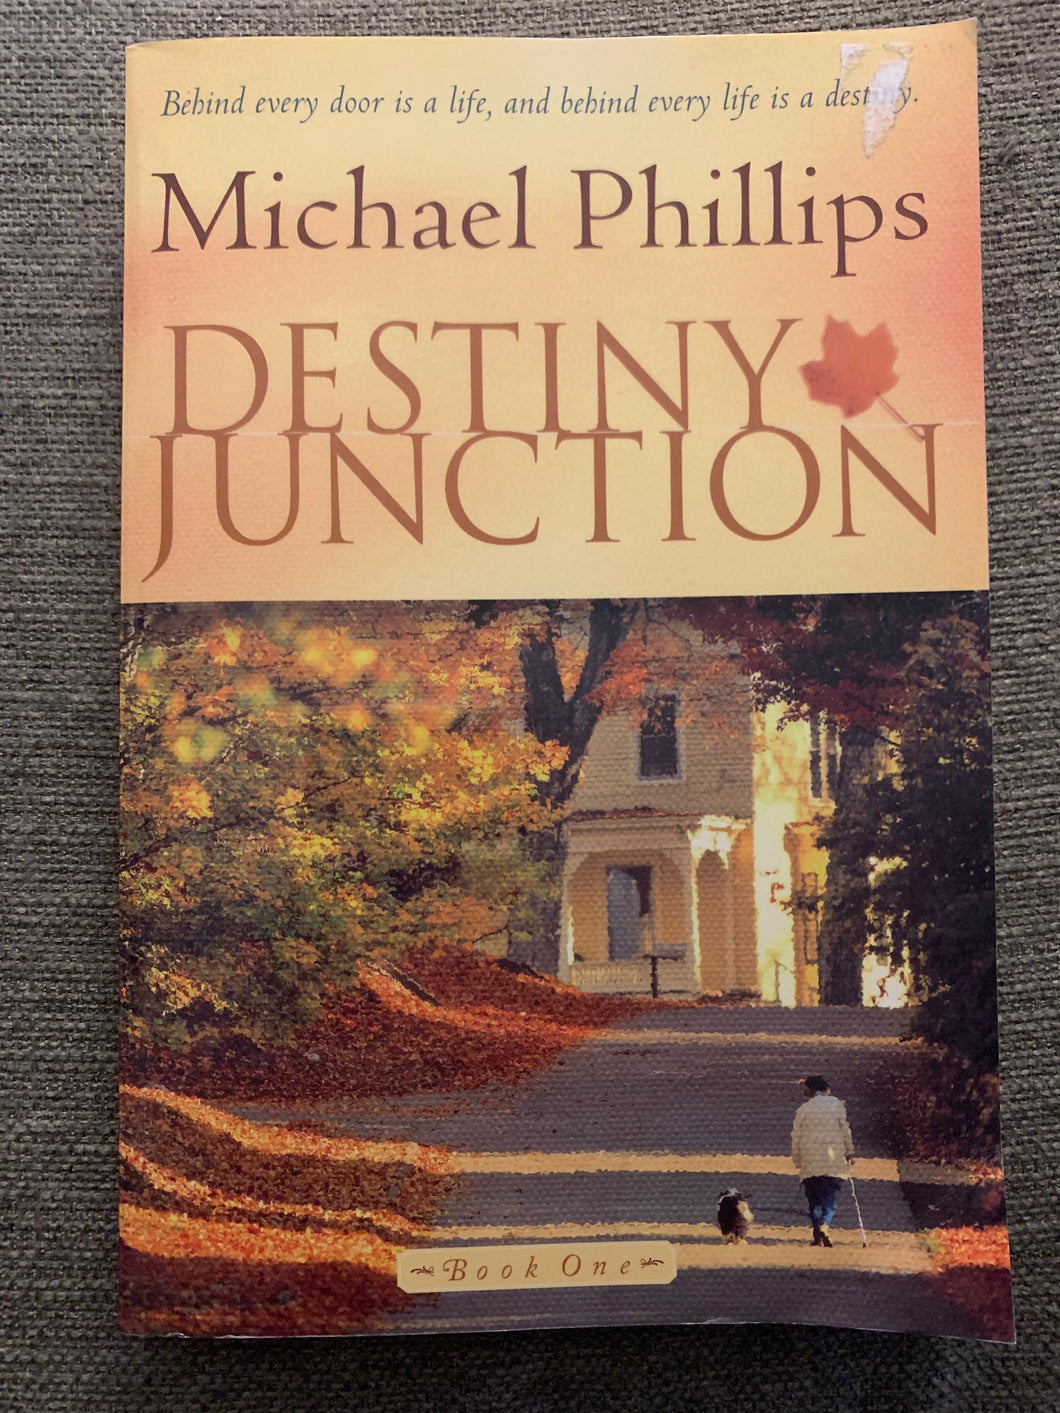 Destiny Junction by Michael Phillips